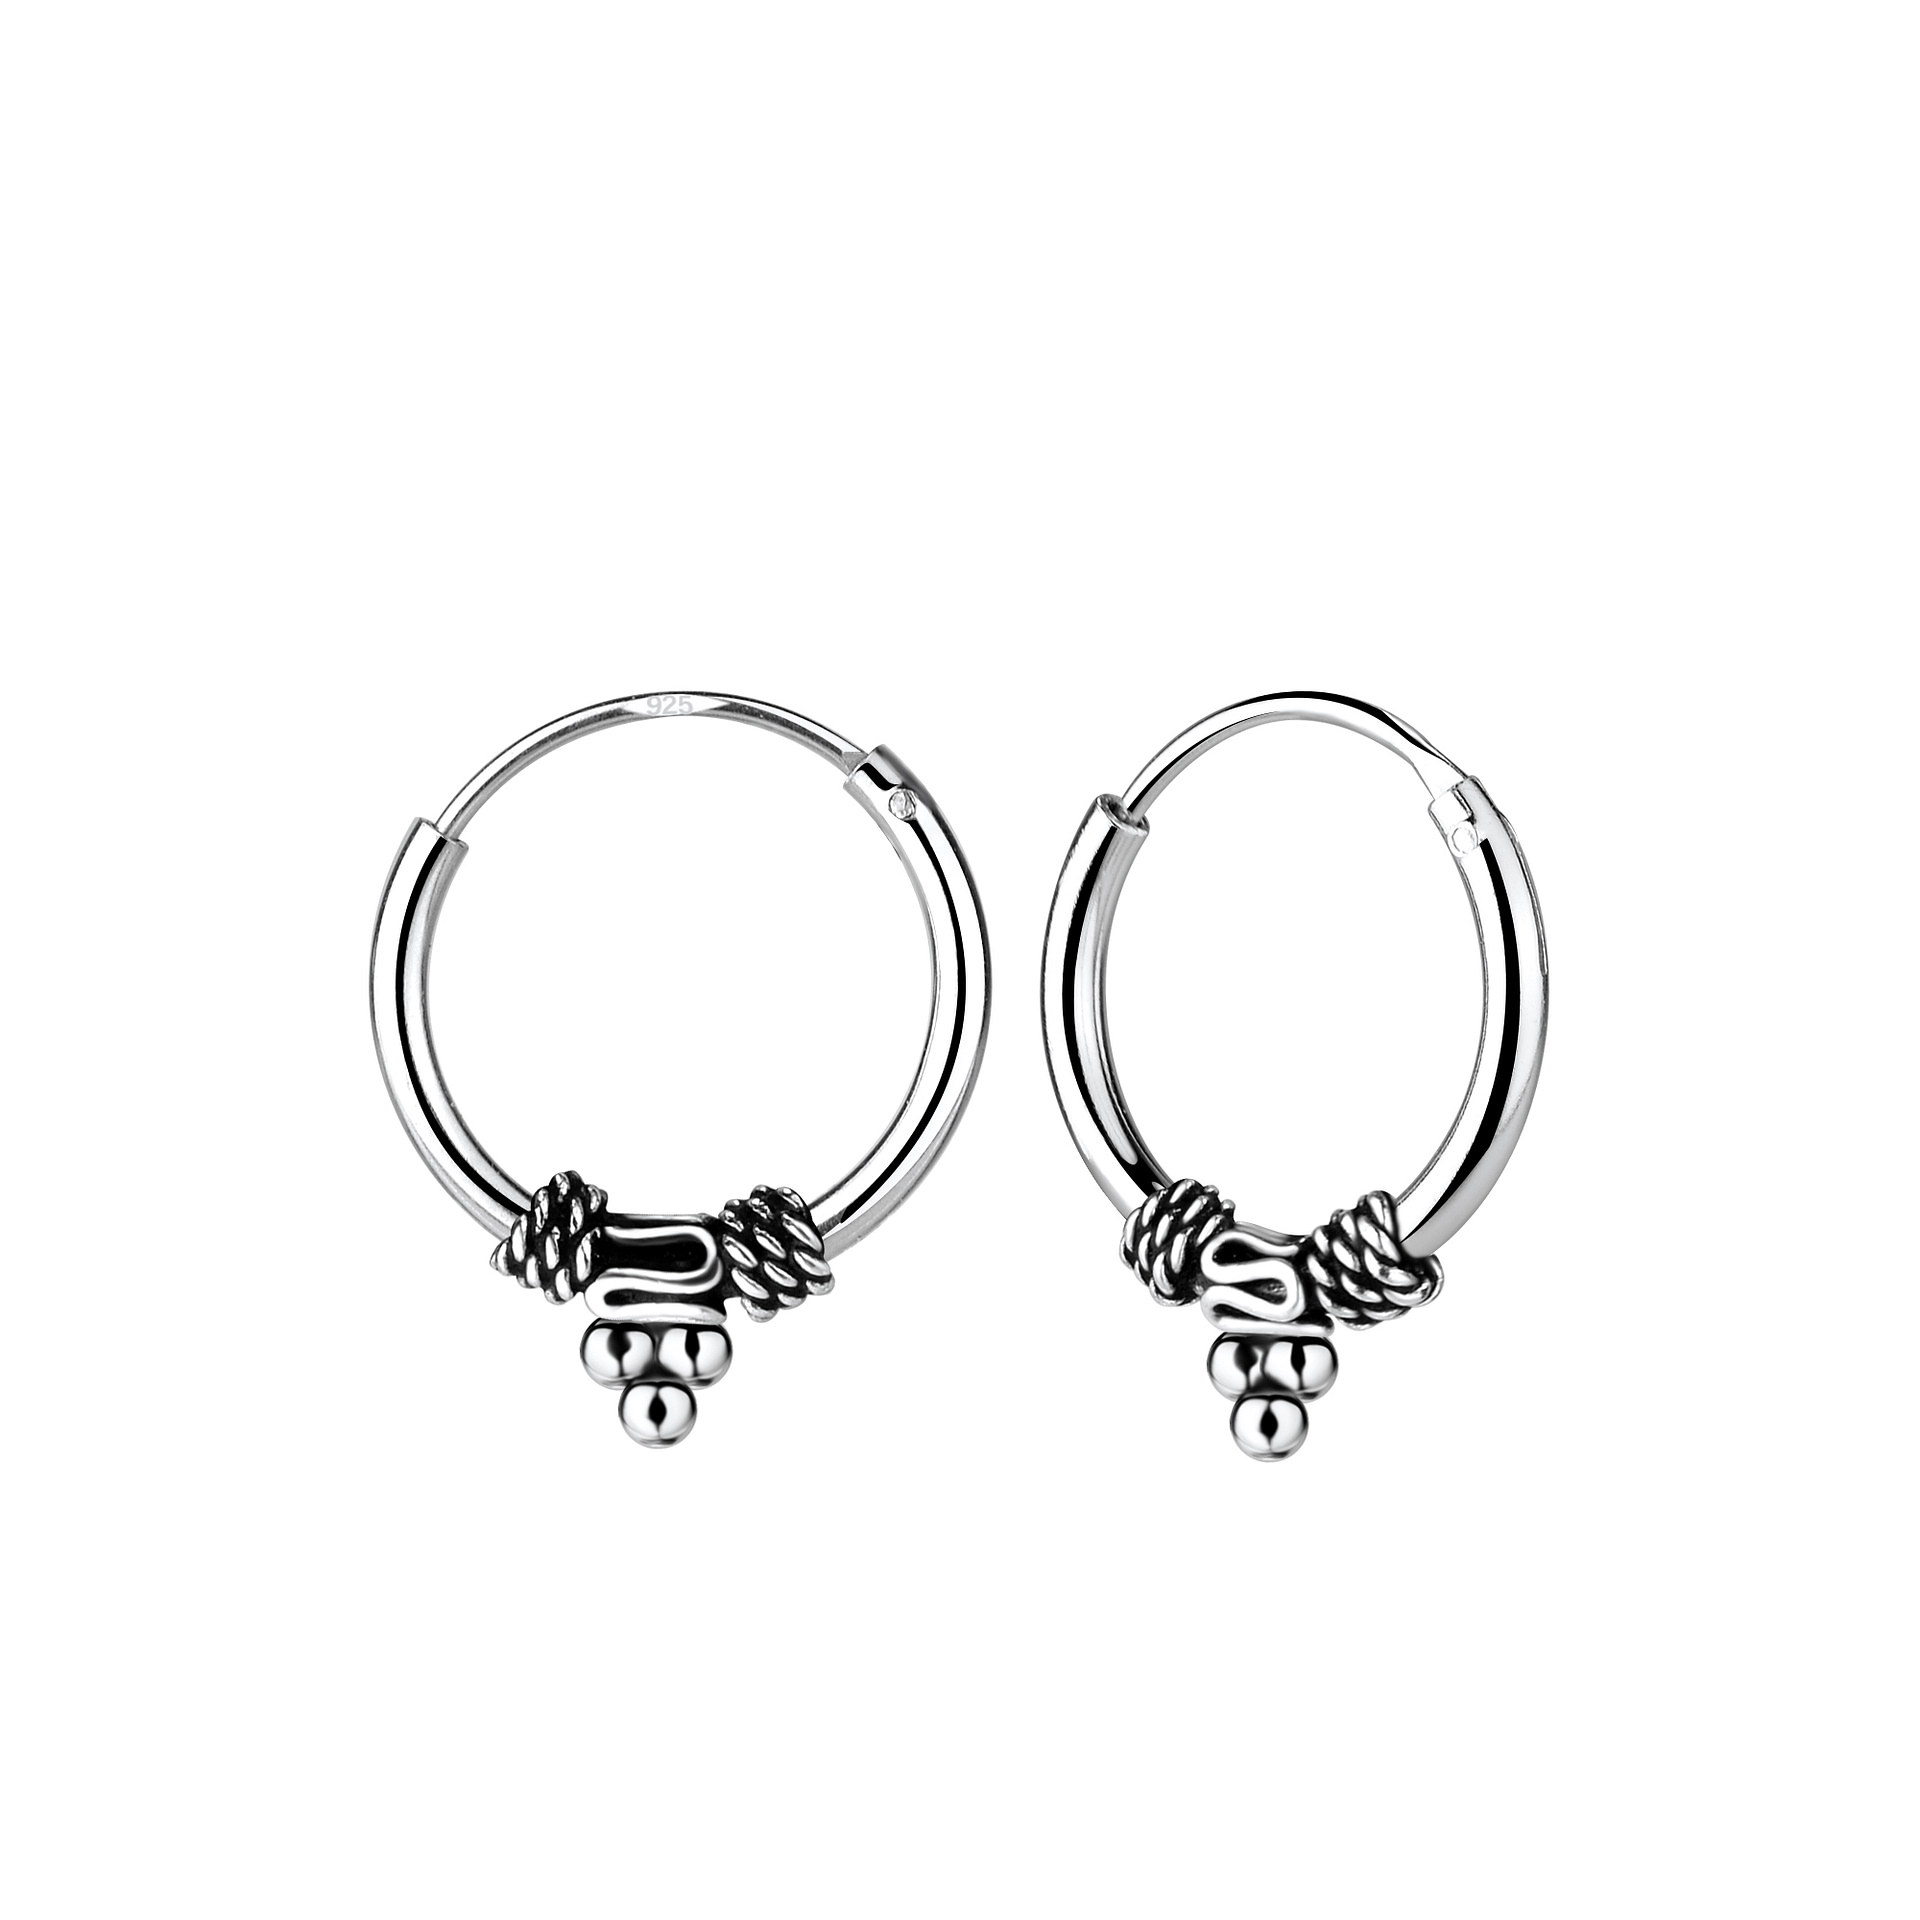 New !! ! Sterling  Silver  925  Bali  Balls  Hoop  Earrings 10,14,16 MM